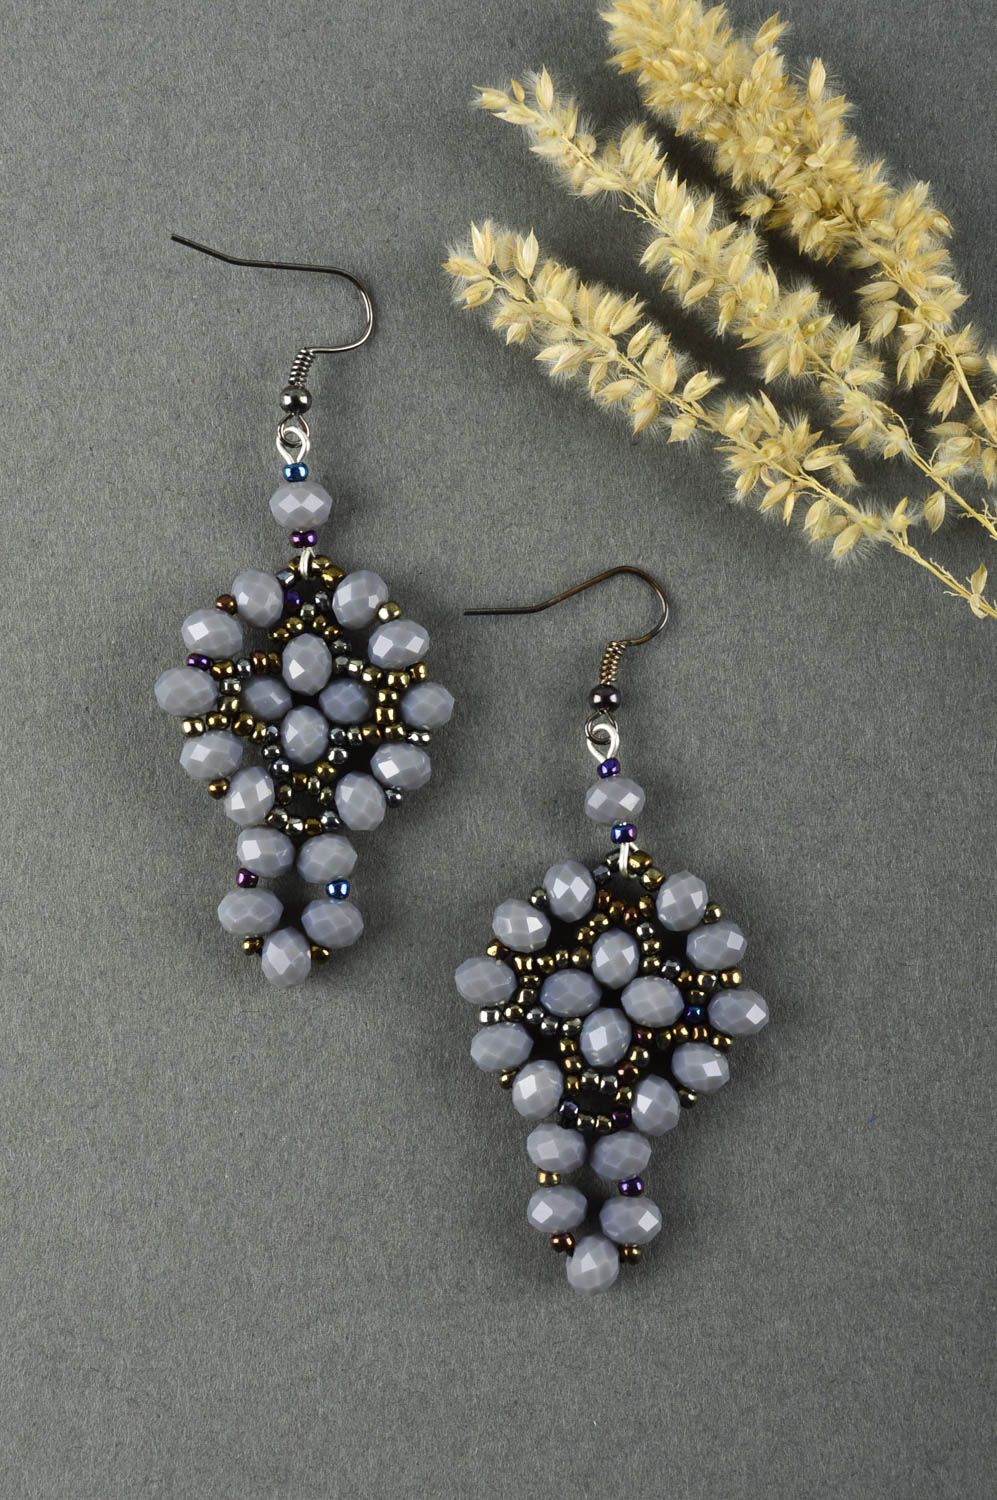 Handmade earrings bead earrings designer accessories fashion jewelry gift ideas photo 1